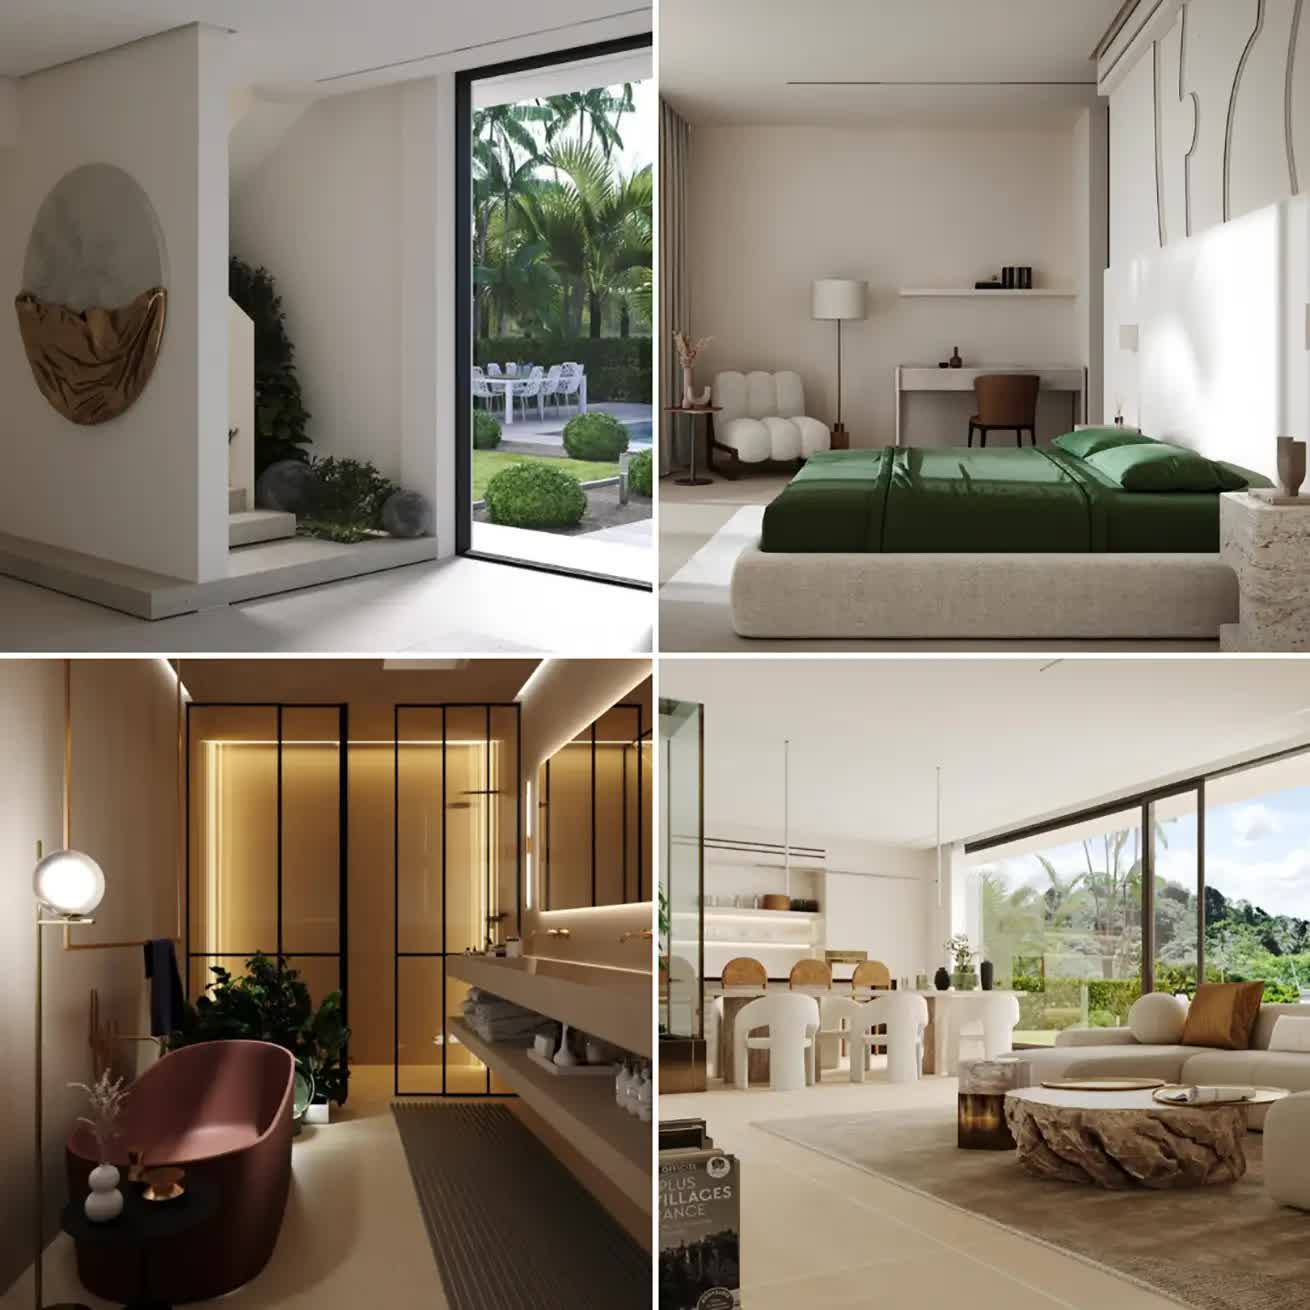 Bedroom, living room, kitchen and bathroom in one of the villa from Hidden City, Ubud